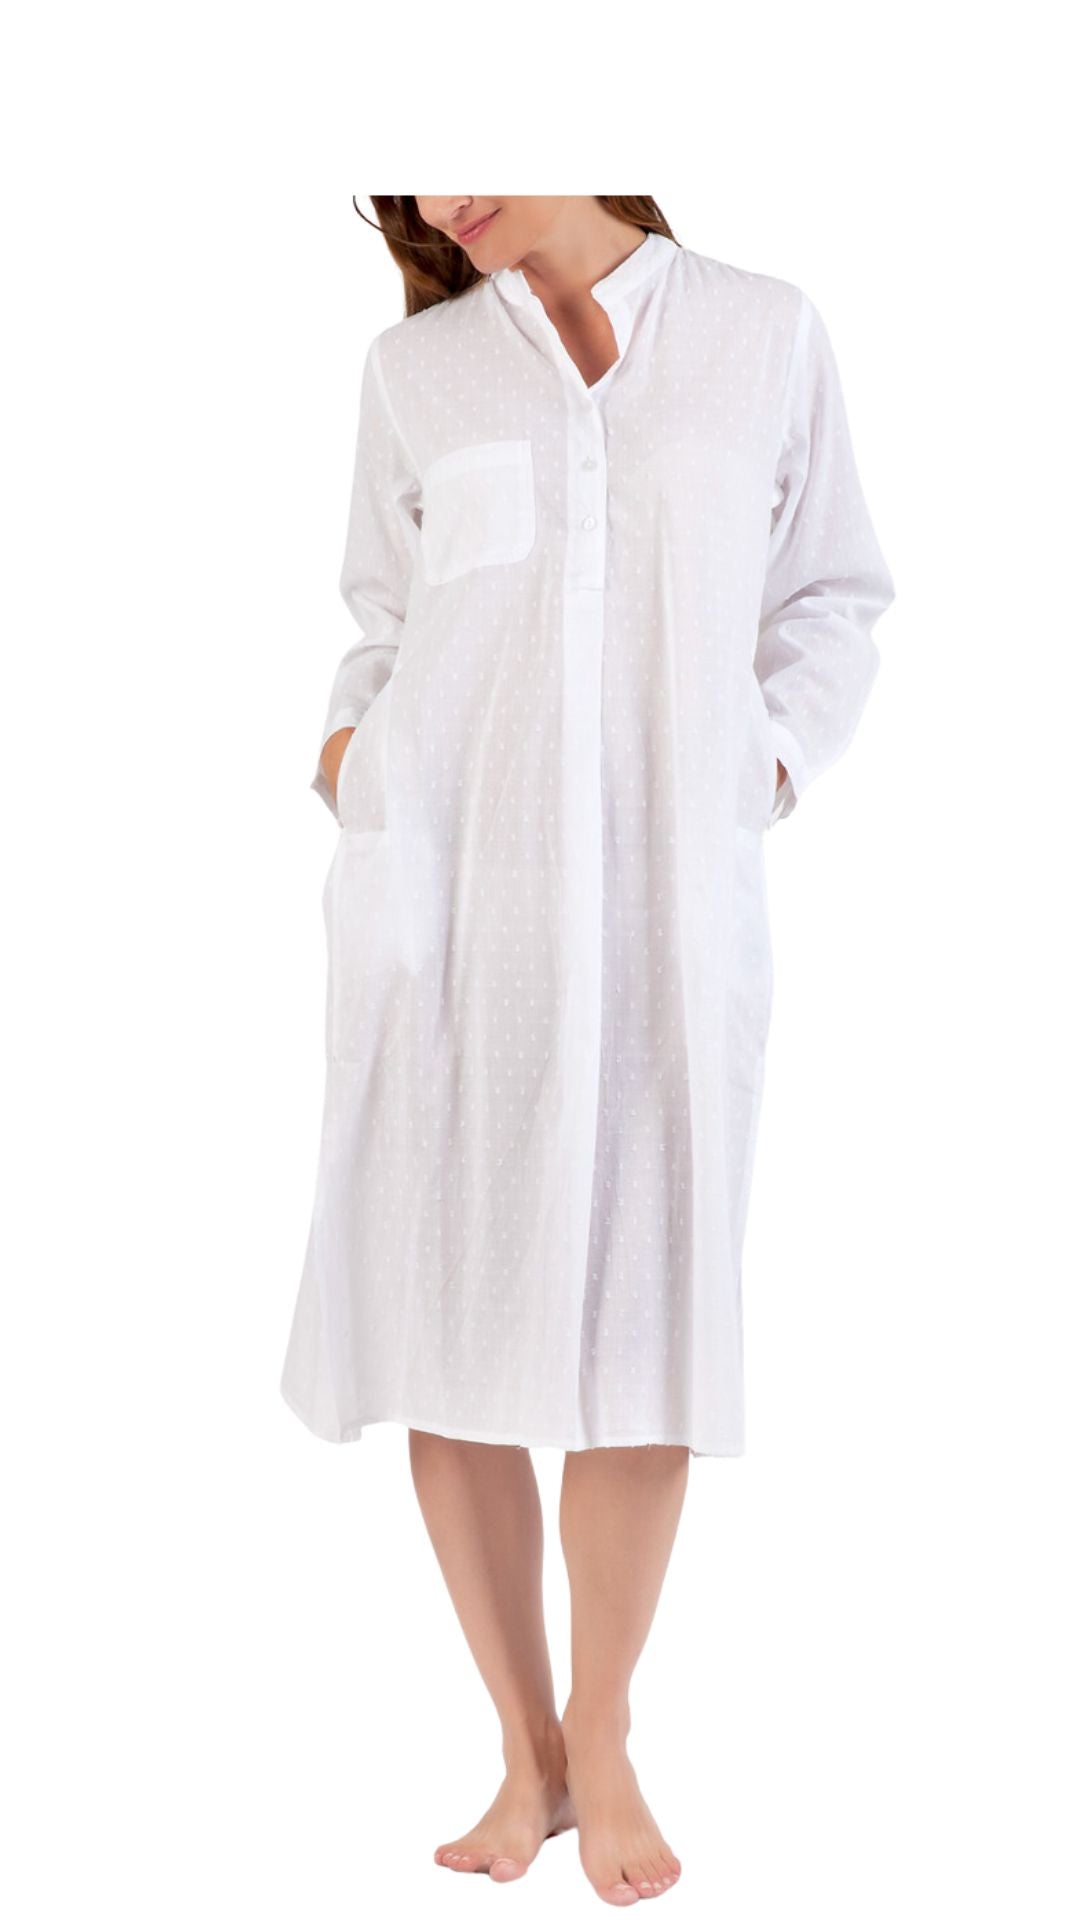 Traditional fine white cotton nightie, nightgown - Australia